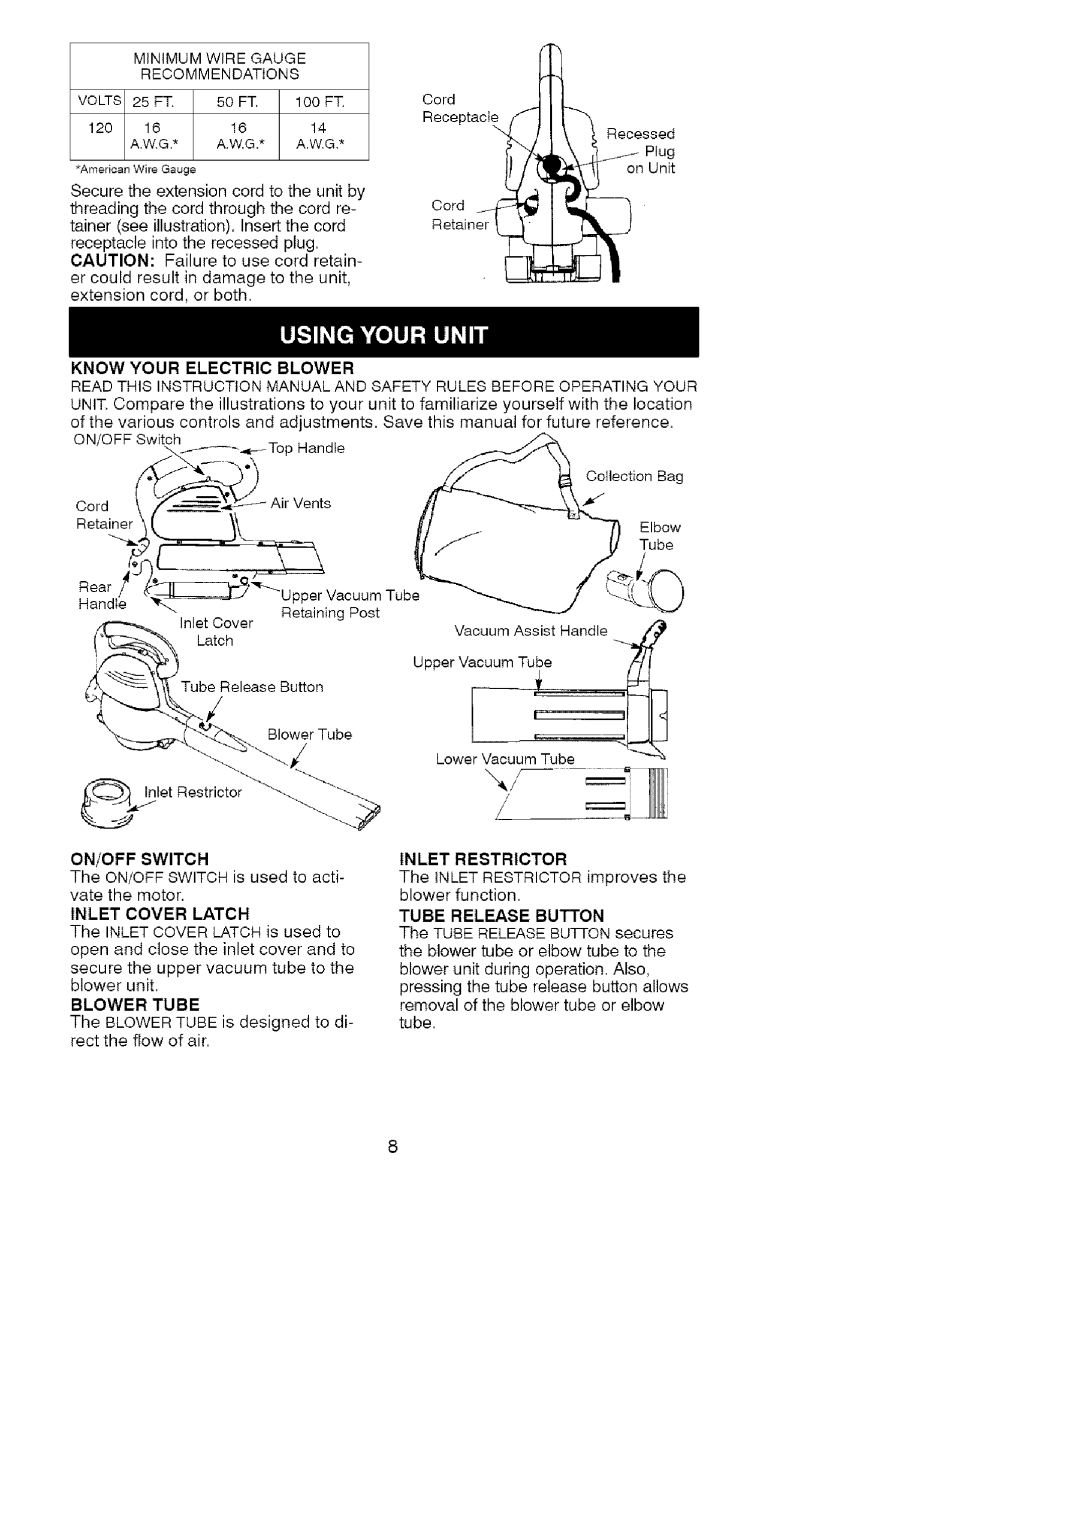 Craftsman 358.74824 instruction manual tlin, Minimumwiregauge Recommendations 